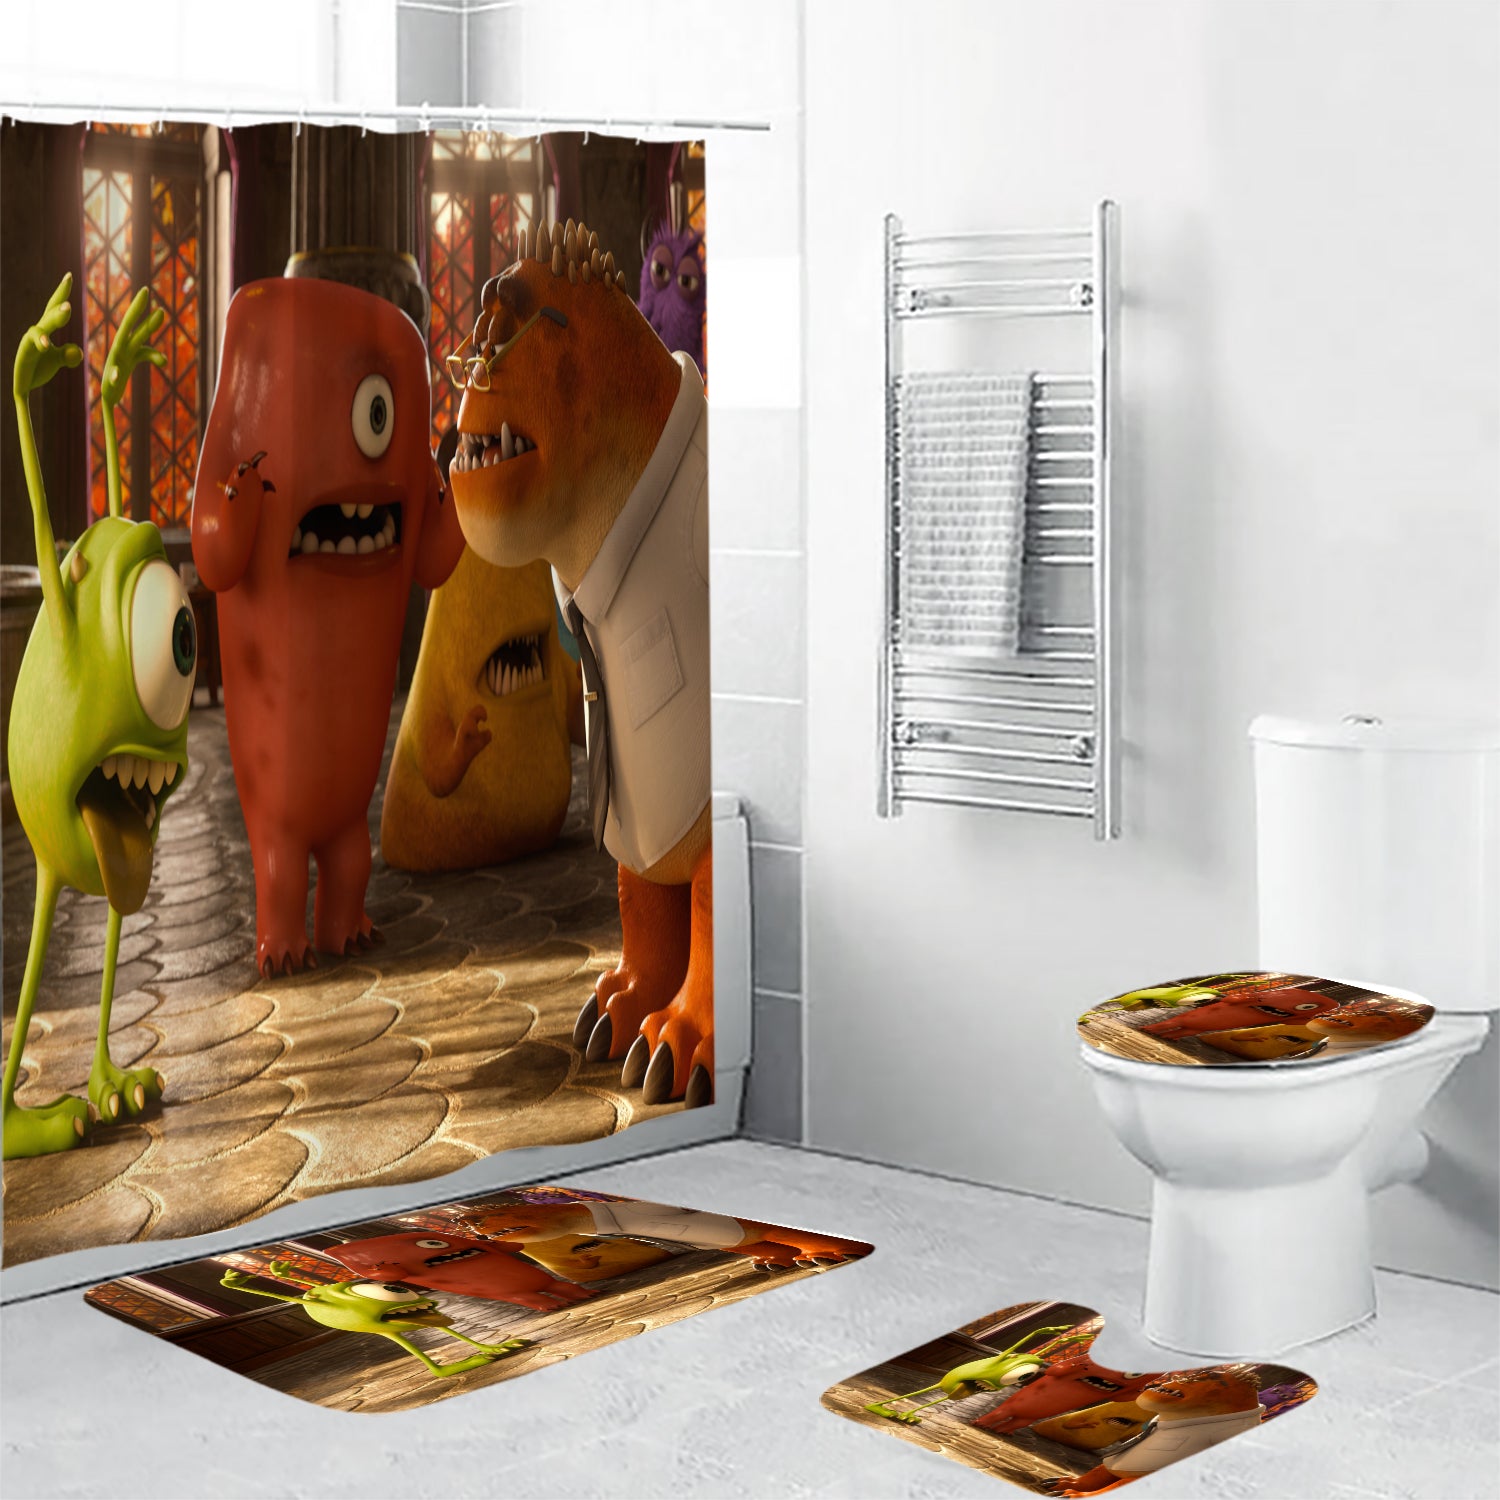 Characters v21 Monsters Inc Monsters University Movie Disney Pixar Waterproof Shower Curtain Non-Slip Toilet Lid Cover Bath Mat - Bathroom Set